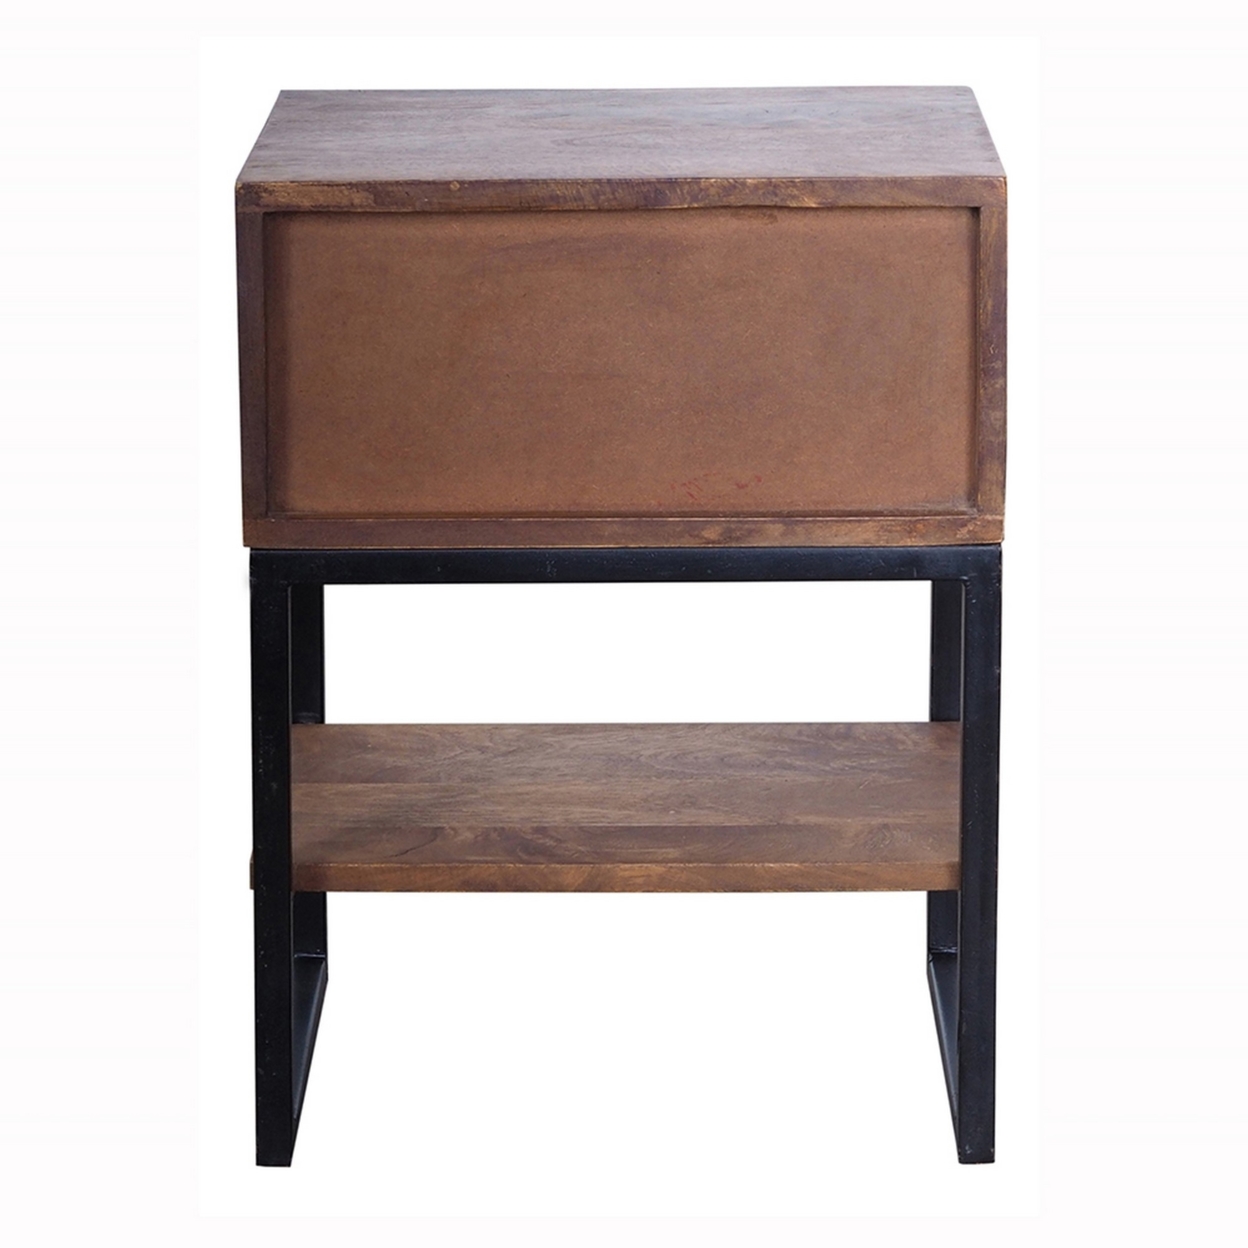 22 Inch Bedside Table Nightstand, Mango Wood, Metal, Natural Brown, Black- Saltoro Sherpi